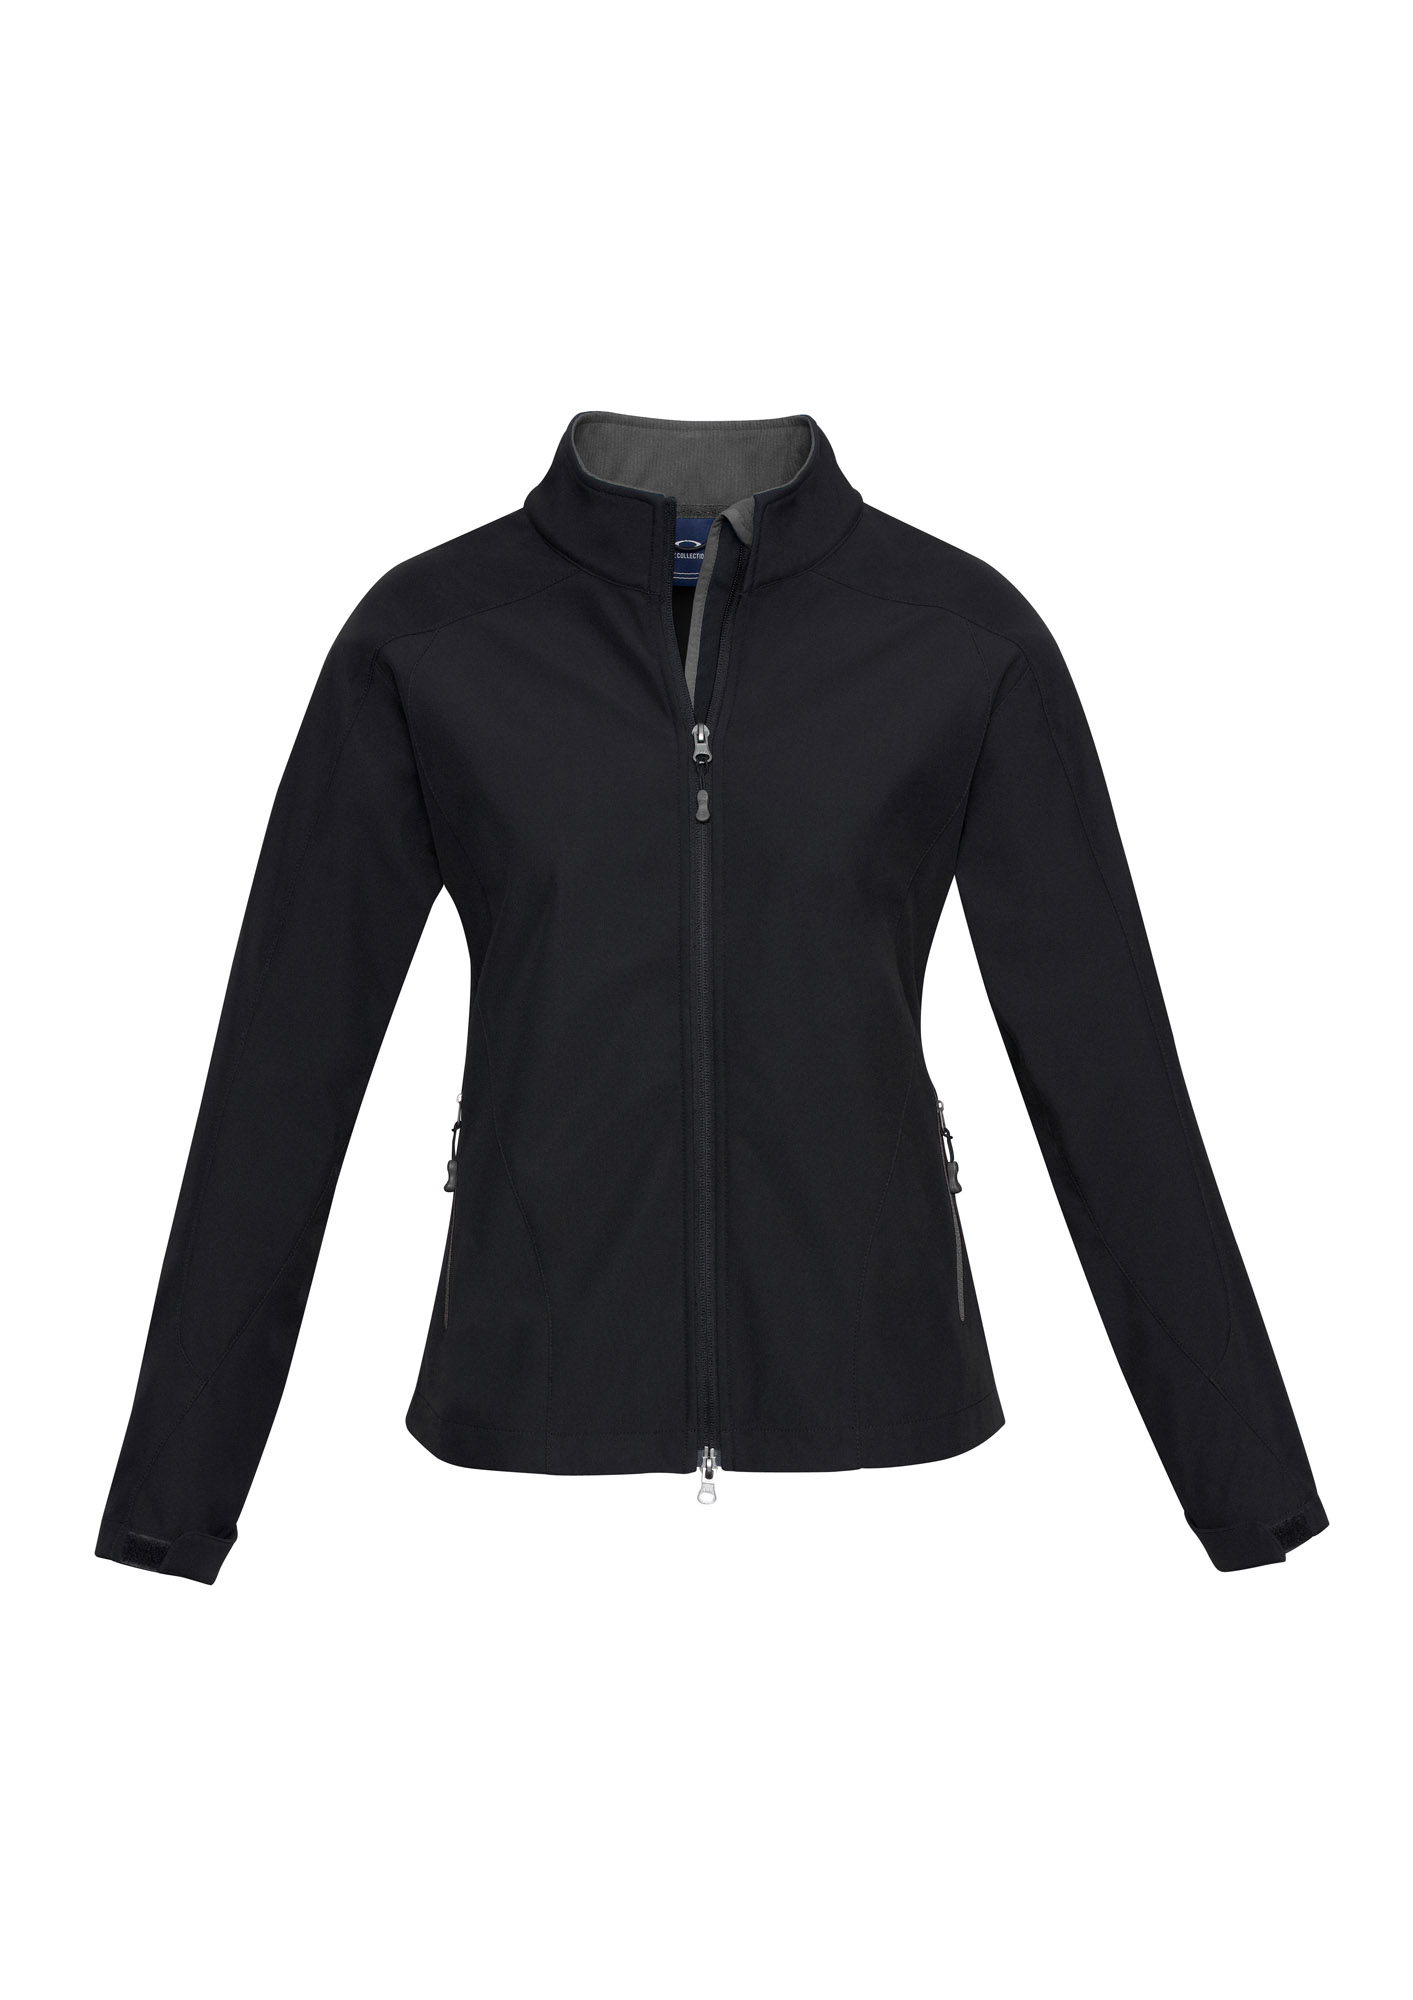 Ladies Geneva Jacket » Australian Merch Co